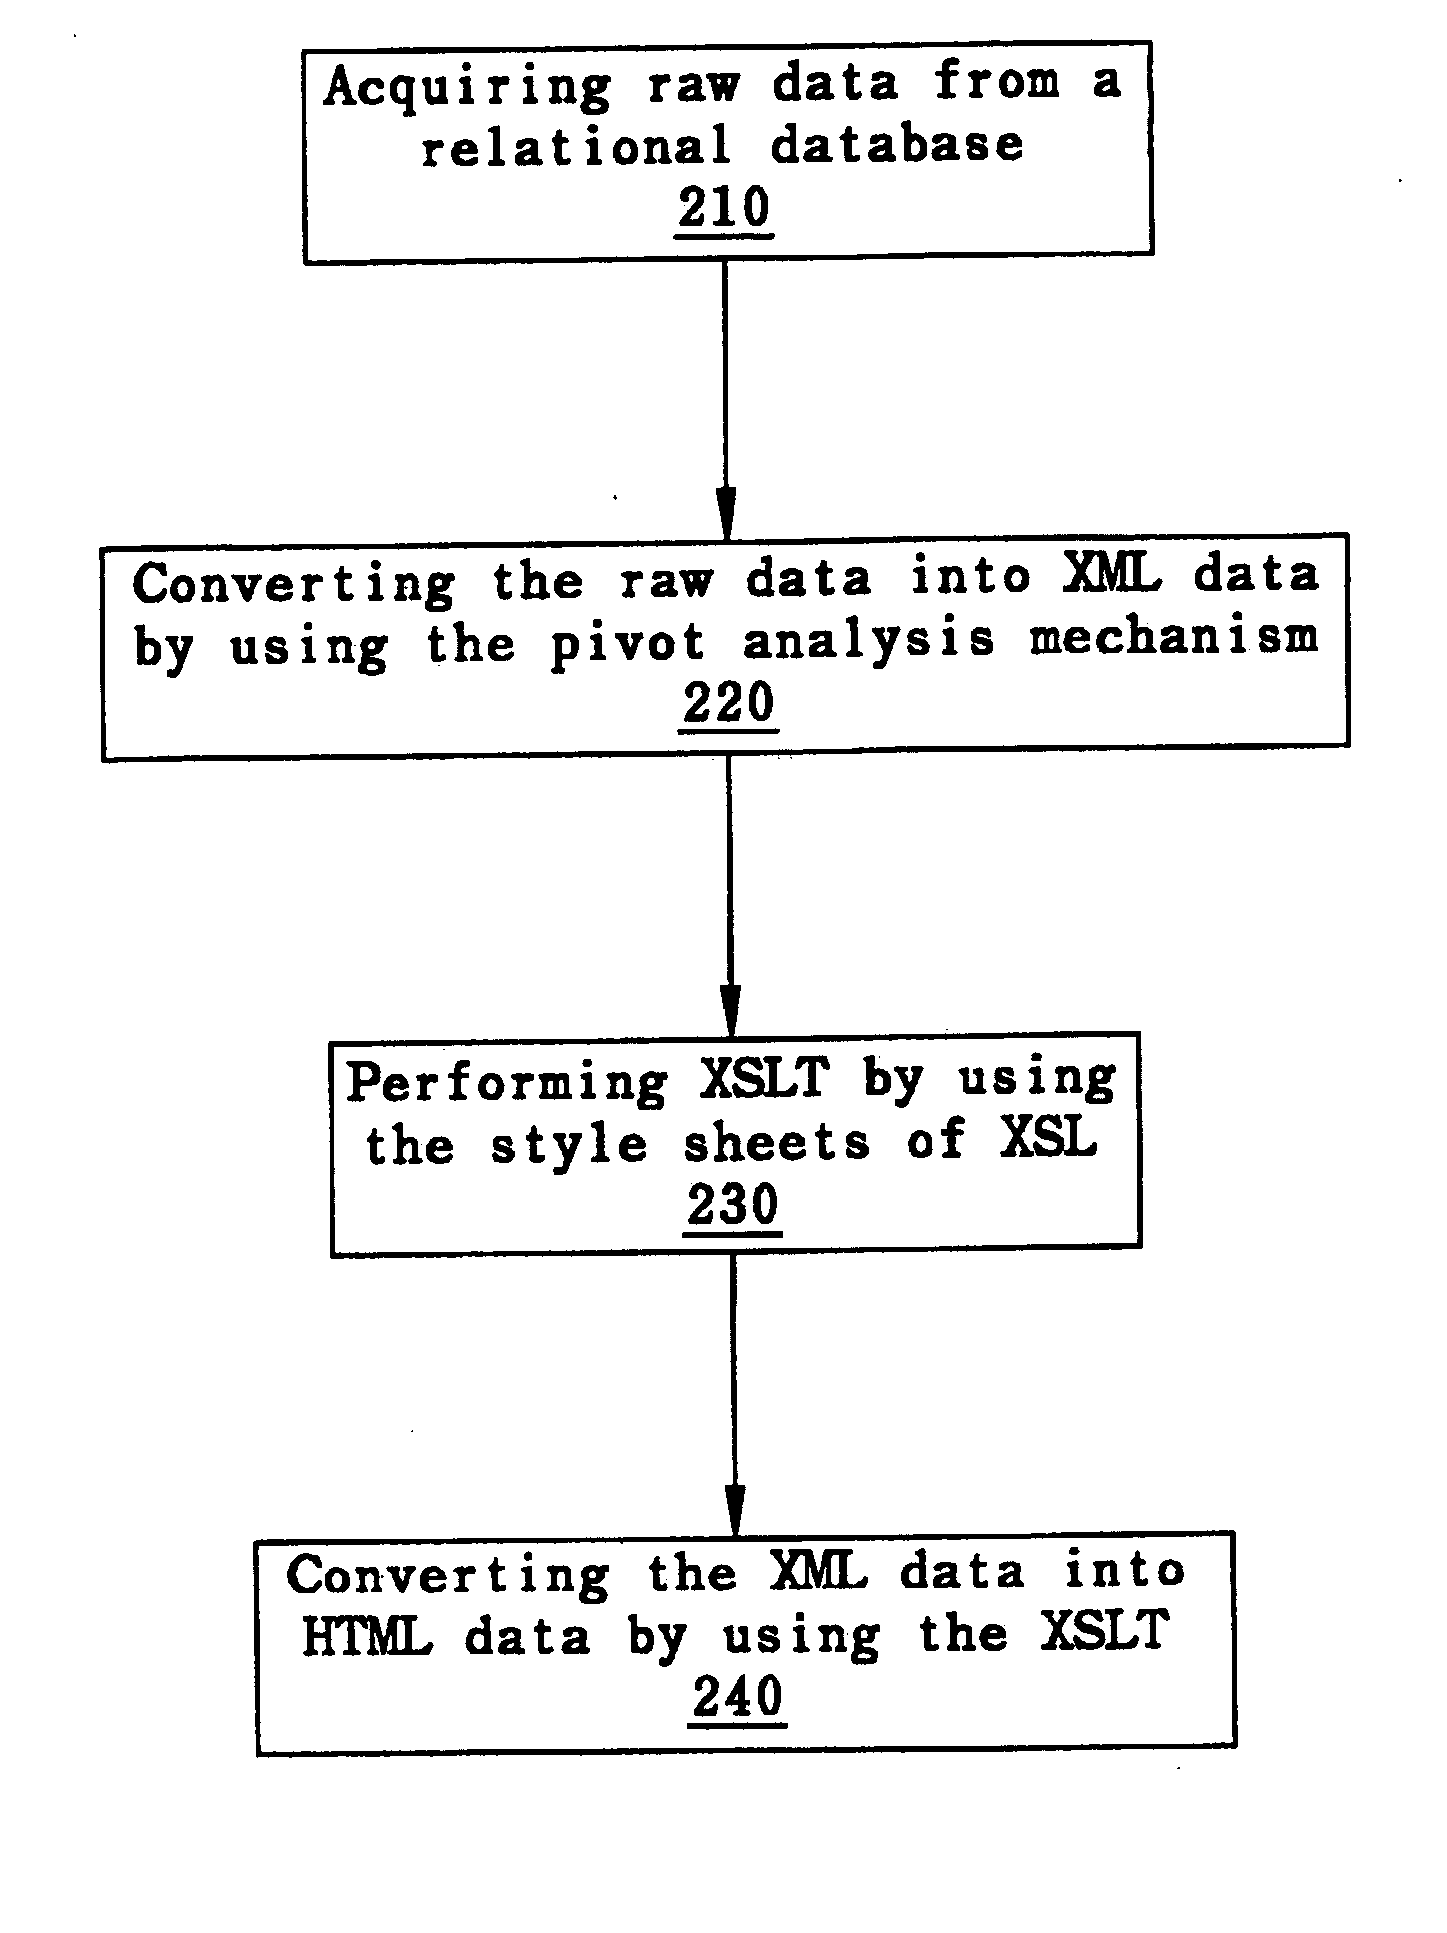 Pivot analysis with XML/XSL mechanism